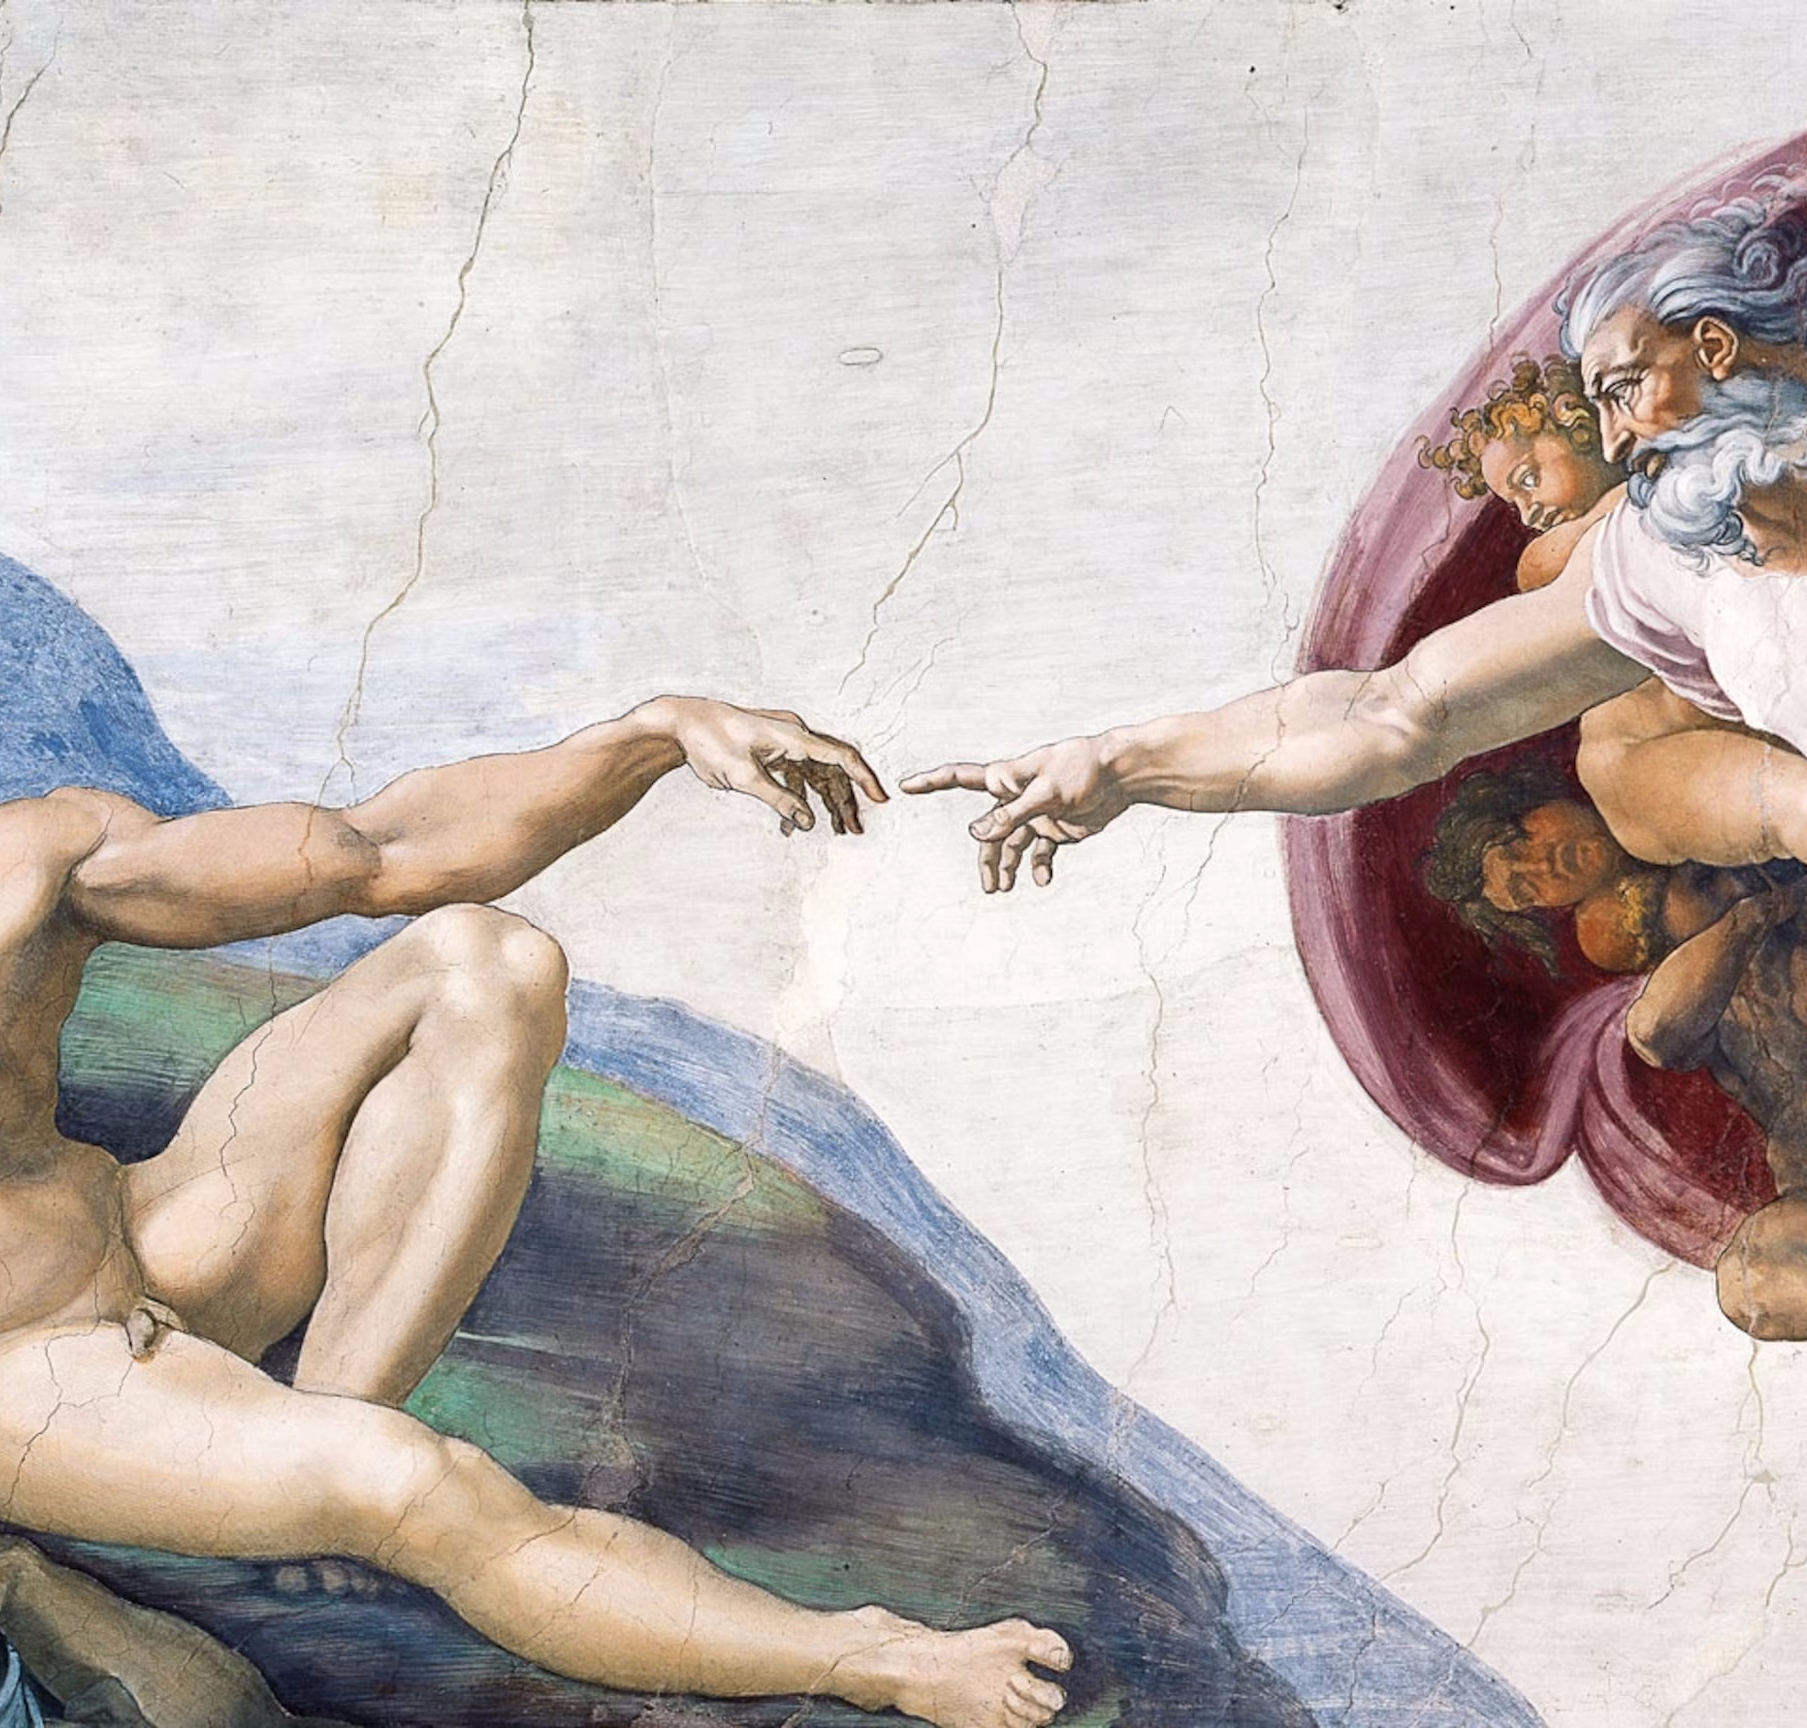 Michelangelo painted the Sistine Chapel.